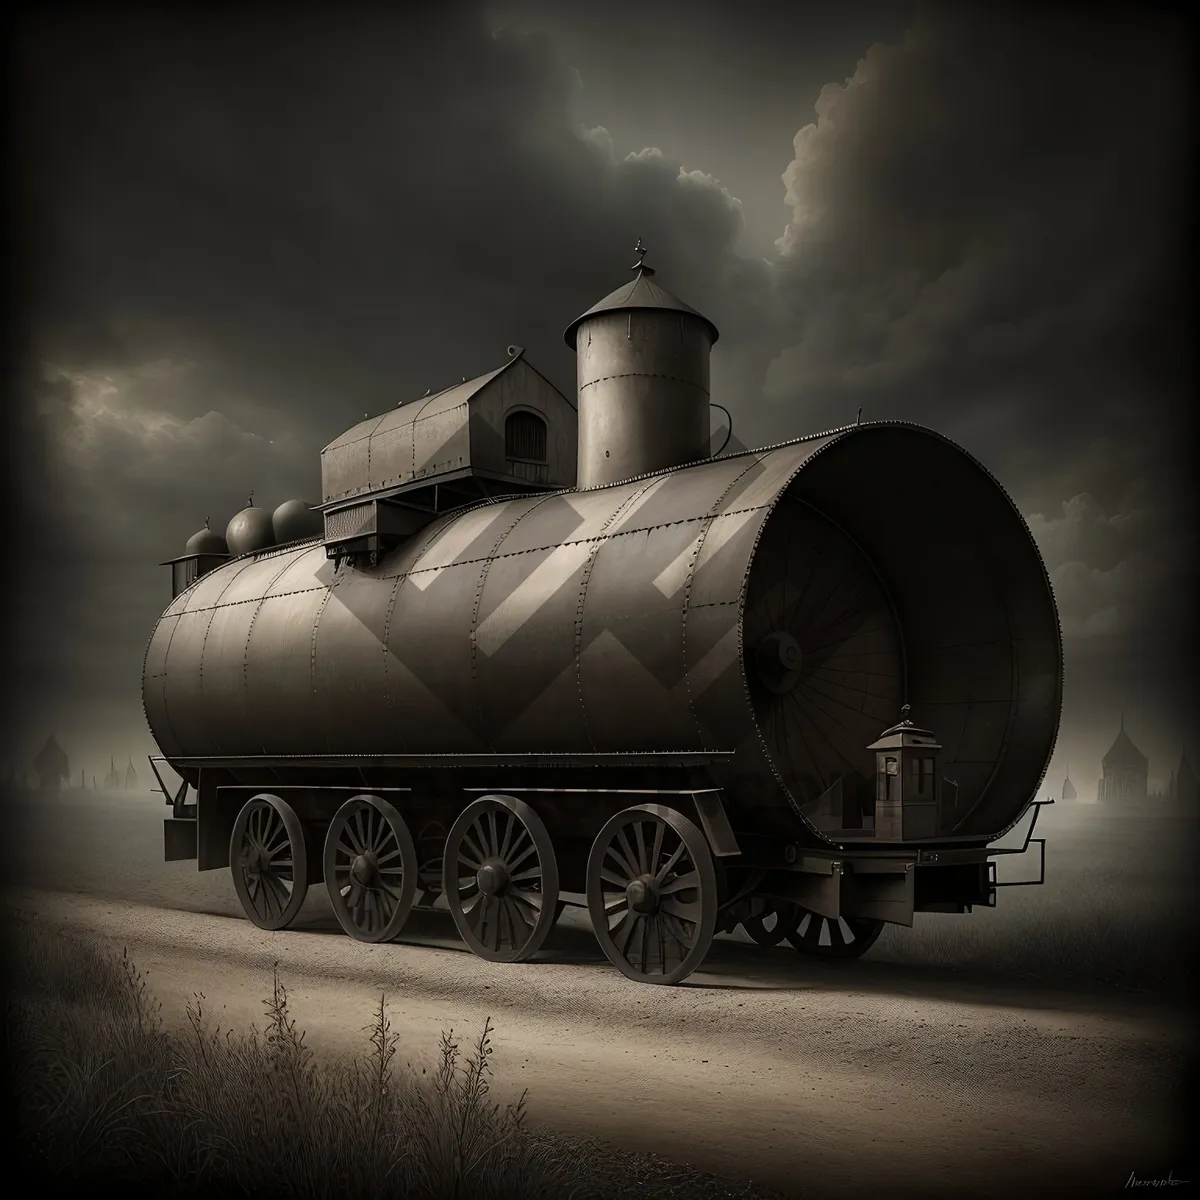 Picture of Vintage steam locomotive chugging through industrial landscape.